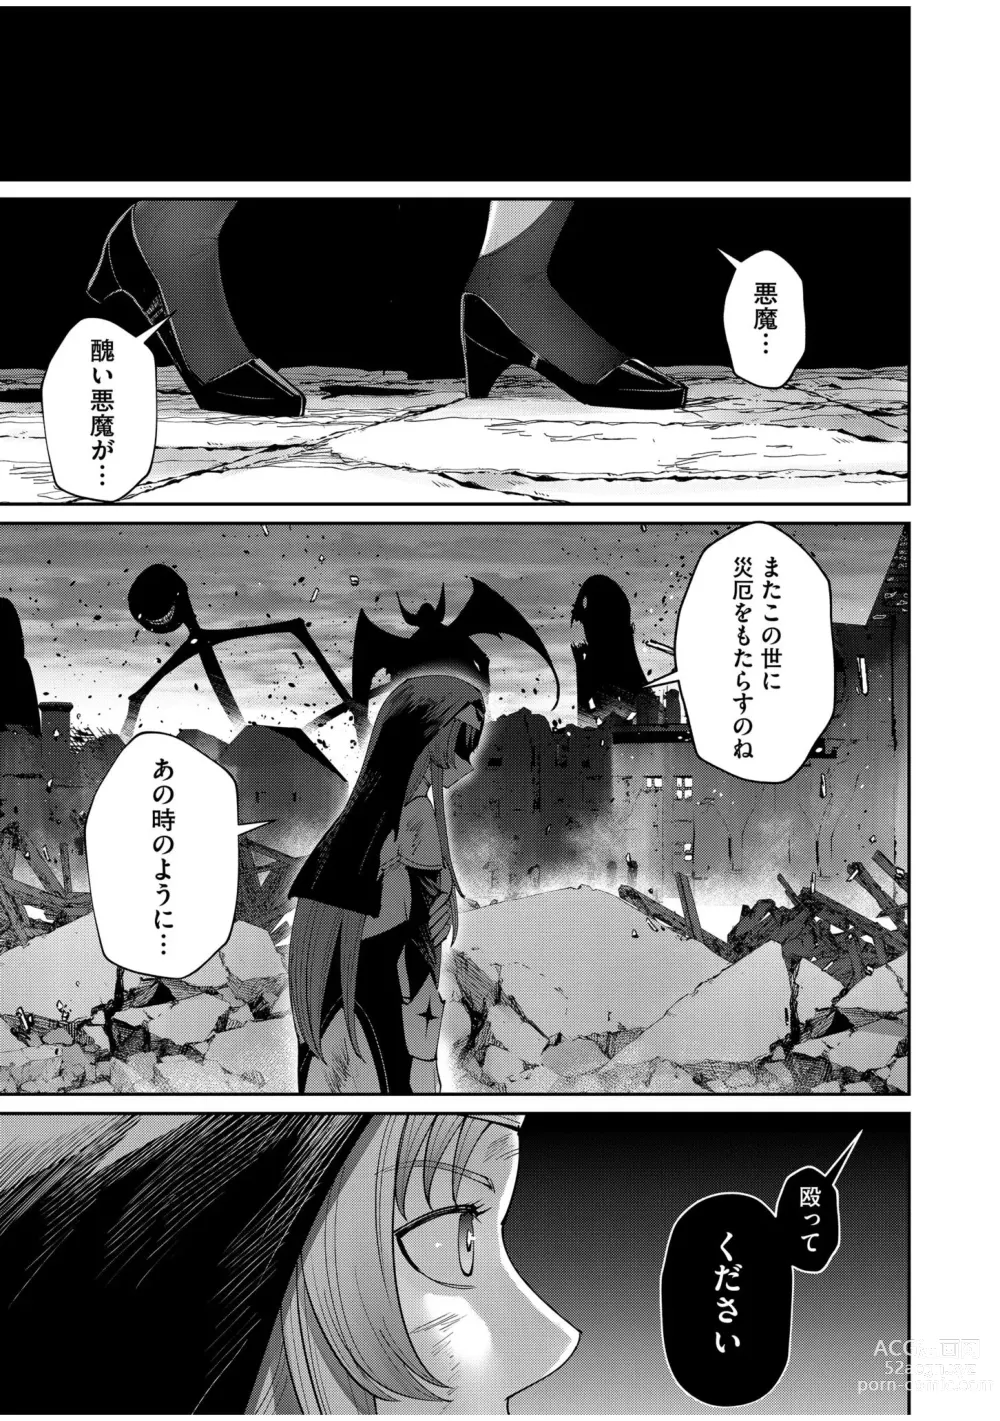 Page 163 of manga Kichiku Eiyuu Vol.07